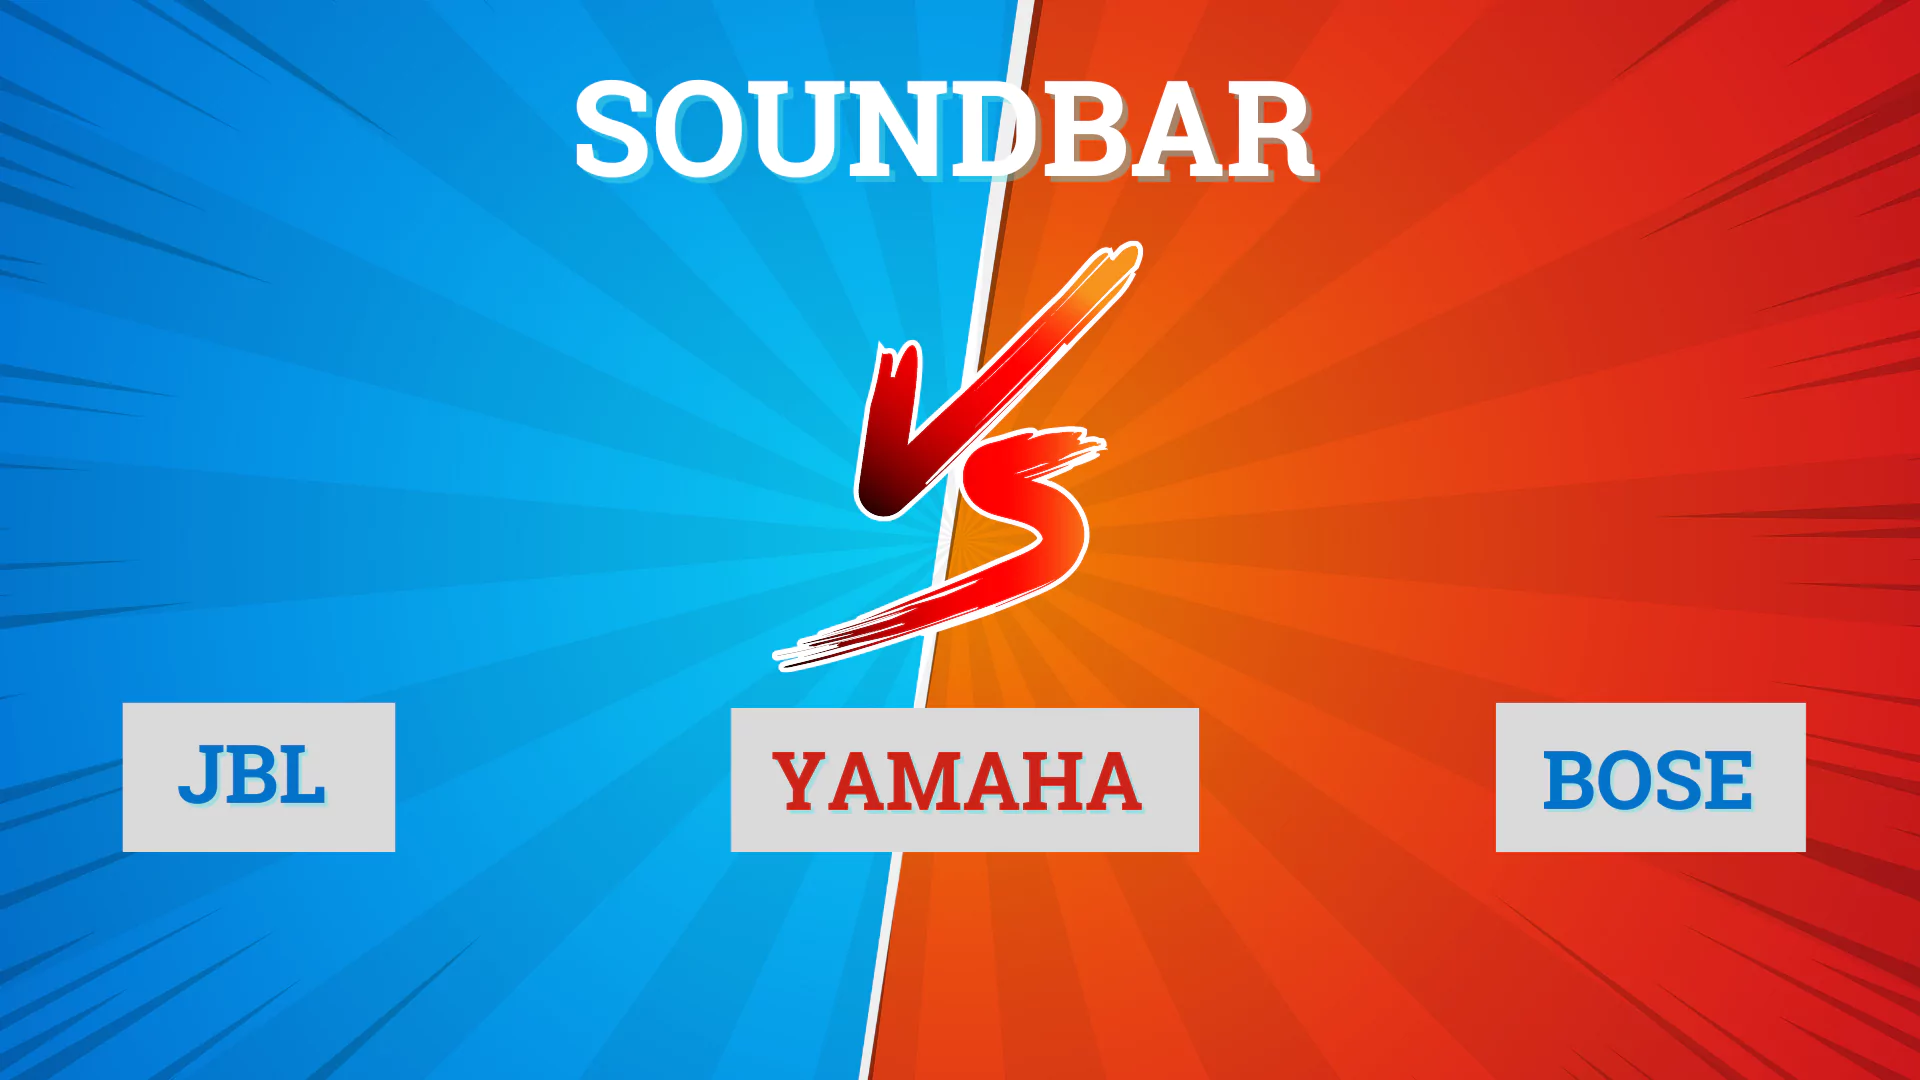 JBL vs Bose vs Yamaha Soundbar: Which Is Best? - Take me technically